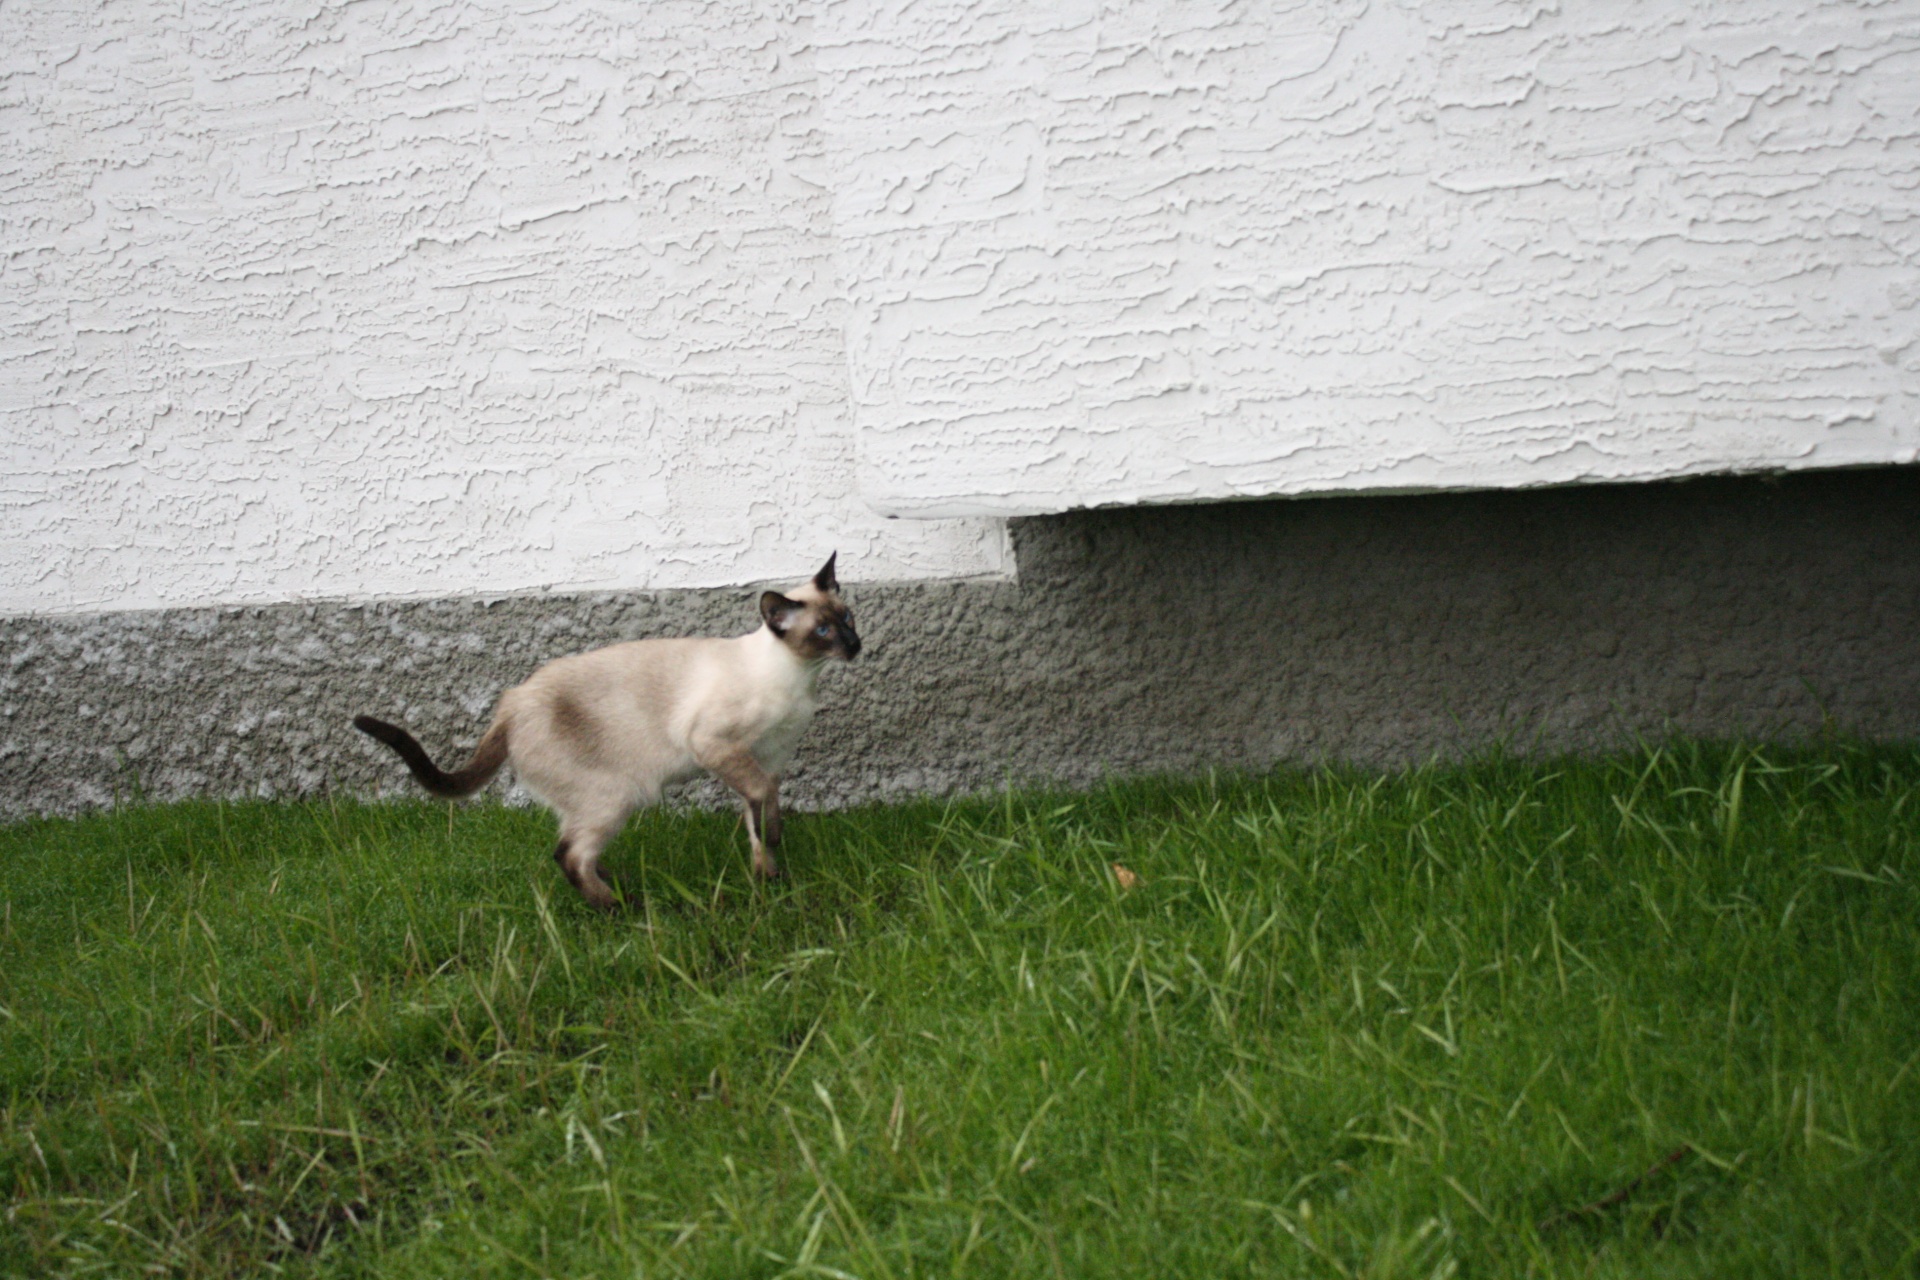 A siamese cat exploring a lawn.